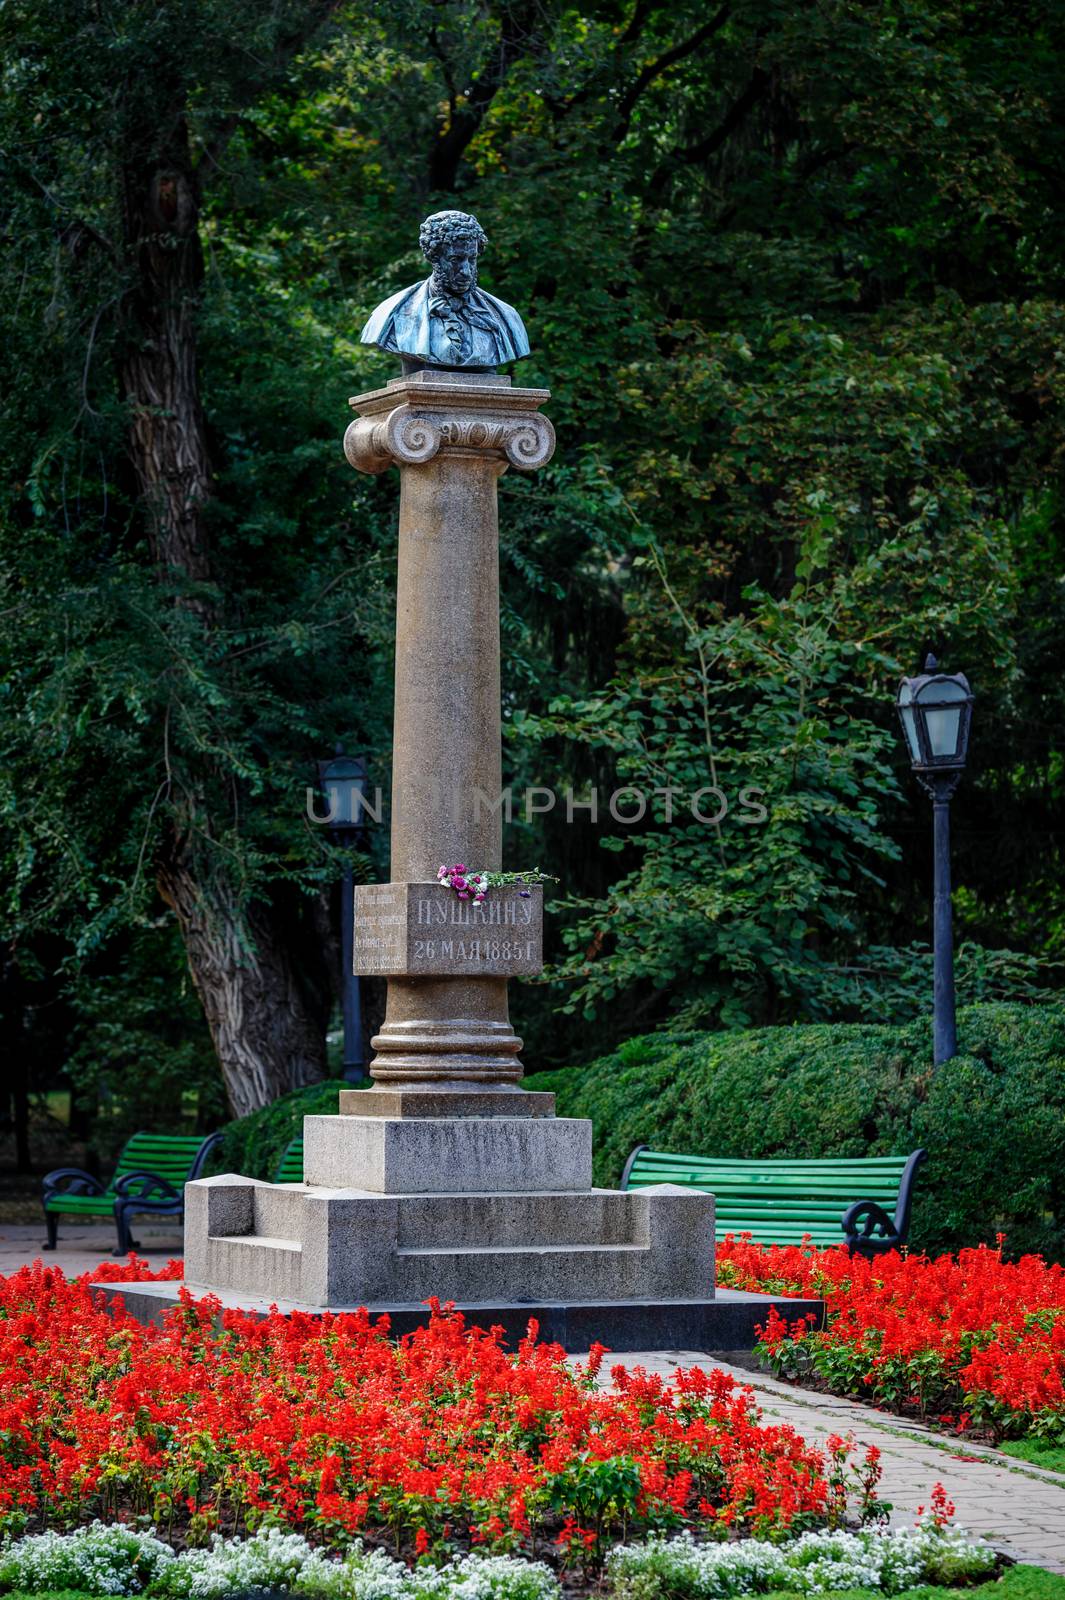 Chisinau, Moldova. September 13, 2014. Monument to Alexander Pushkin, great Russian poet of 19th century. 